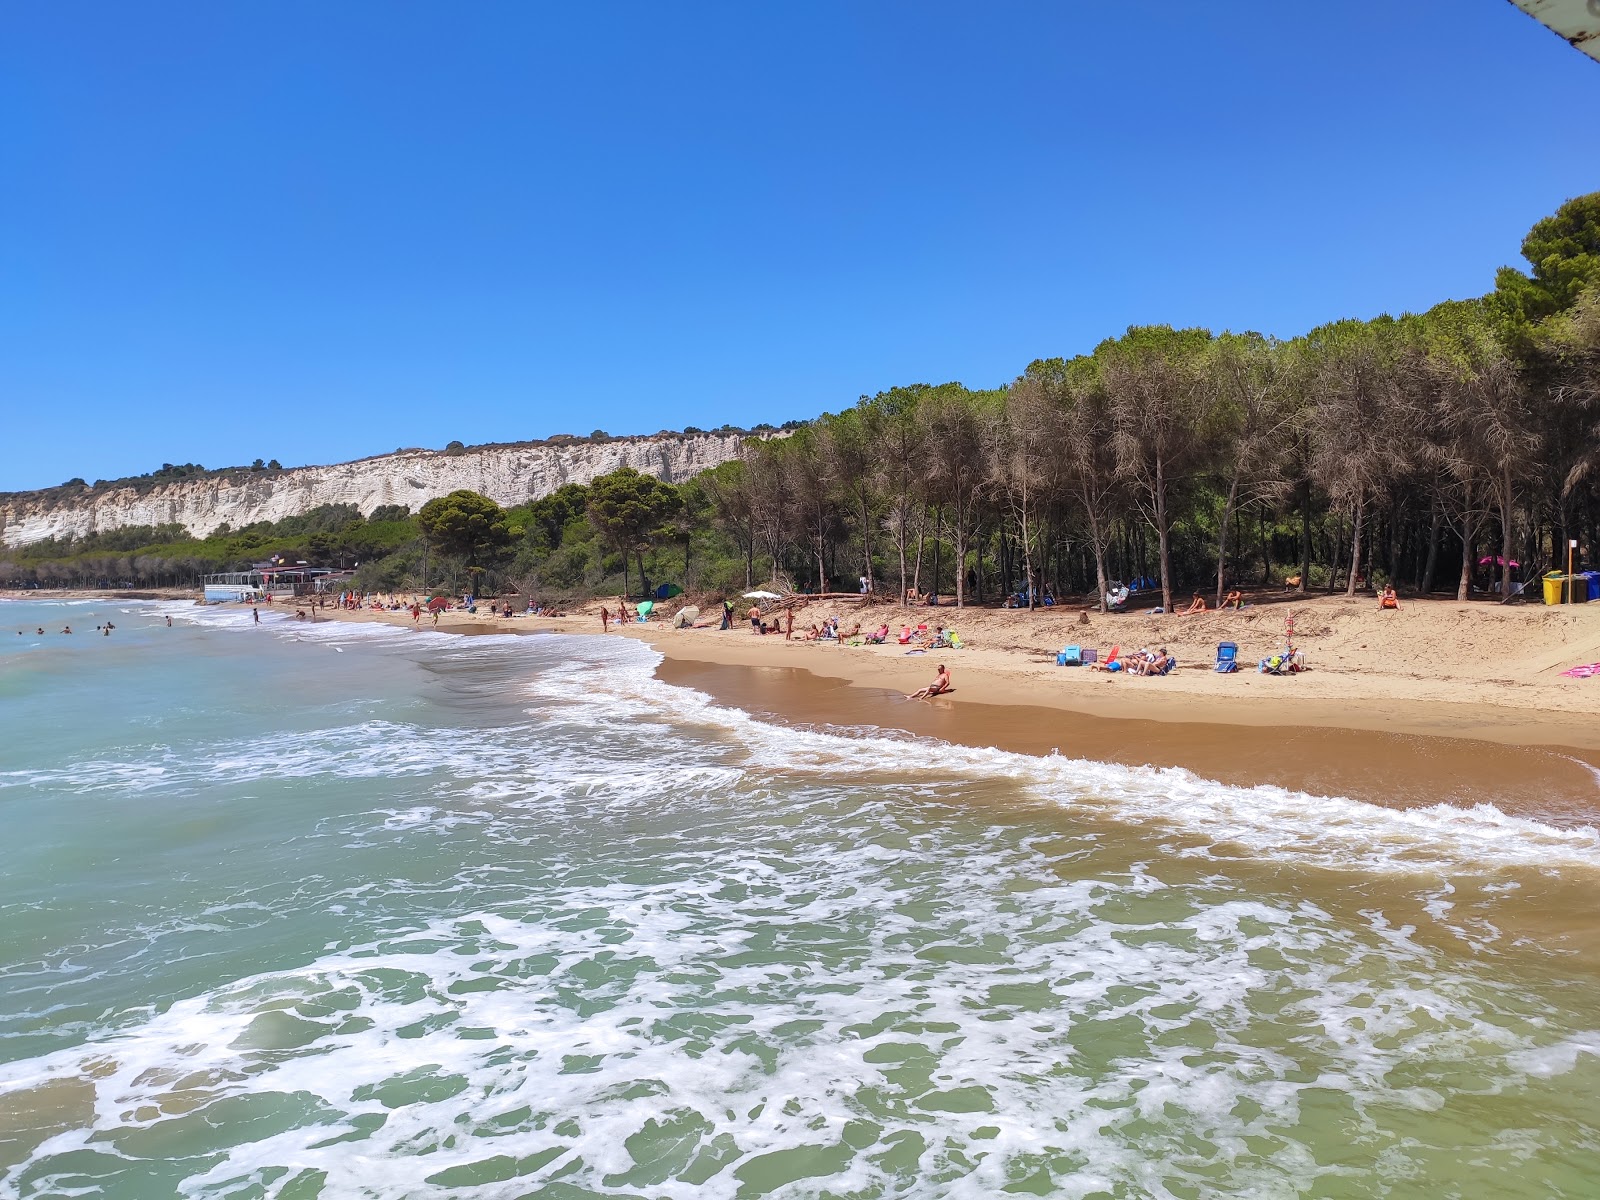 Photo of Spiaggia Di Eraclea Minoa with bright sand surface